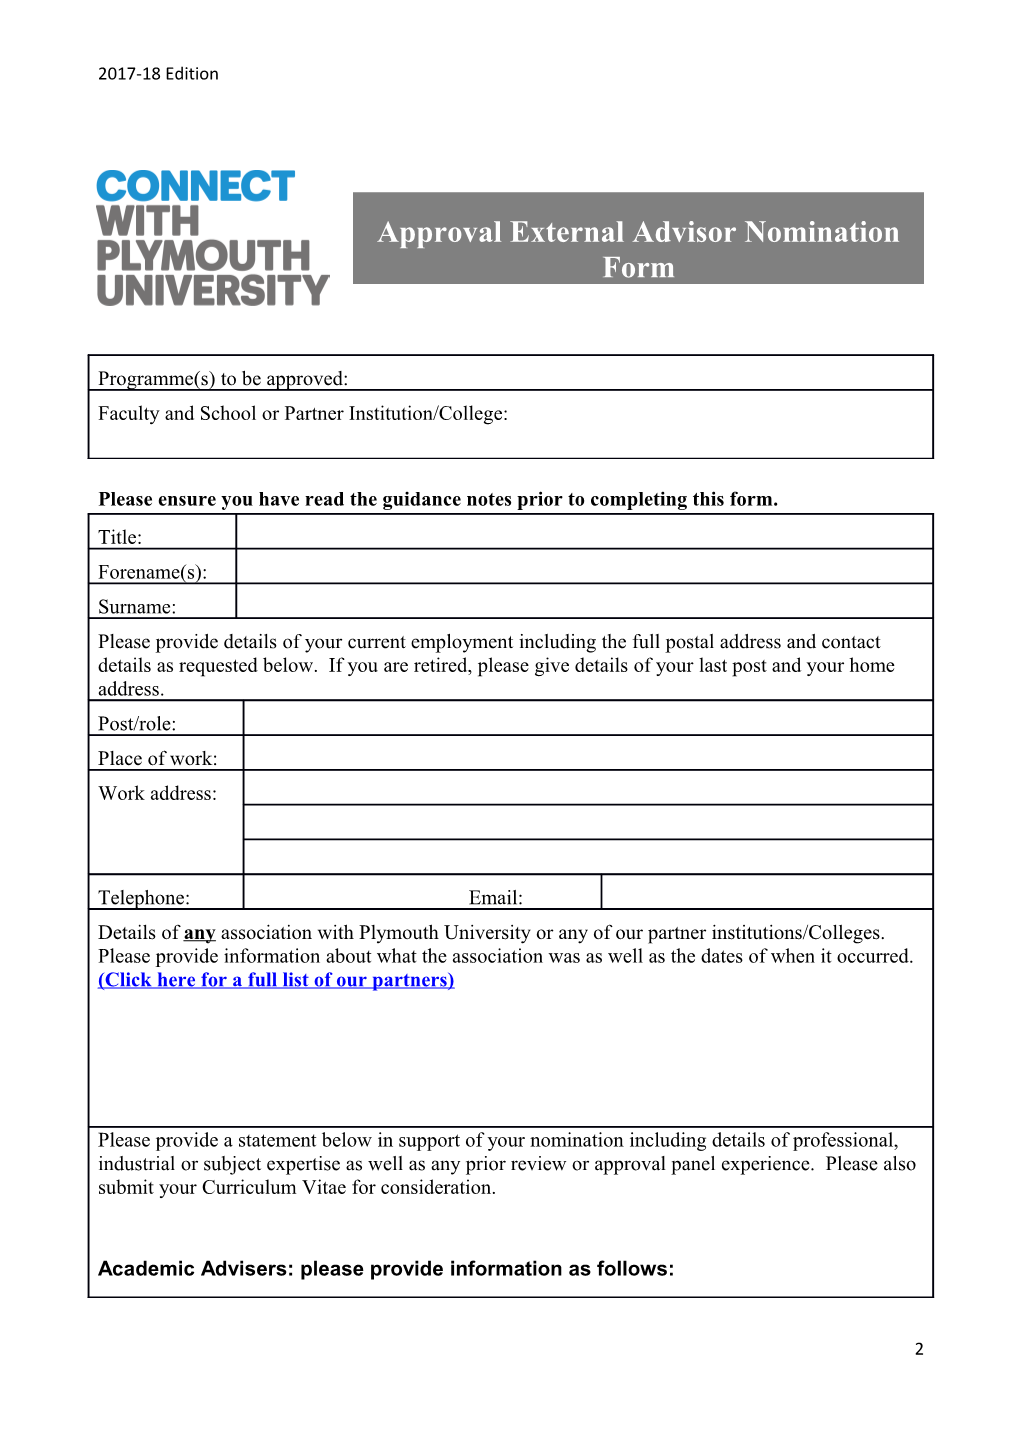 Proposed Nomination for External Advisor